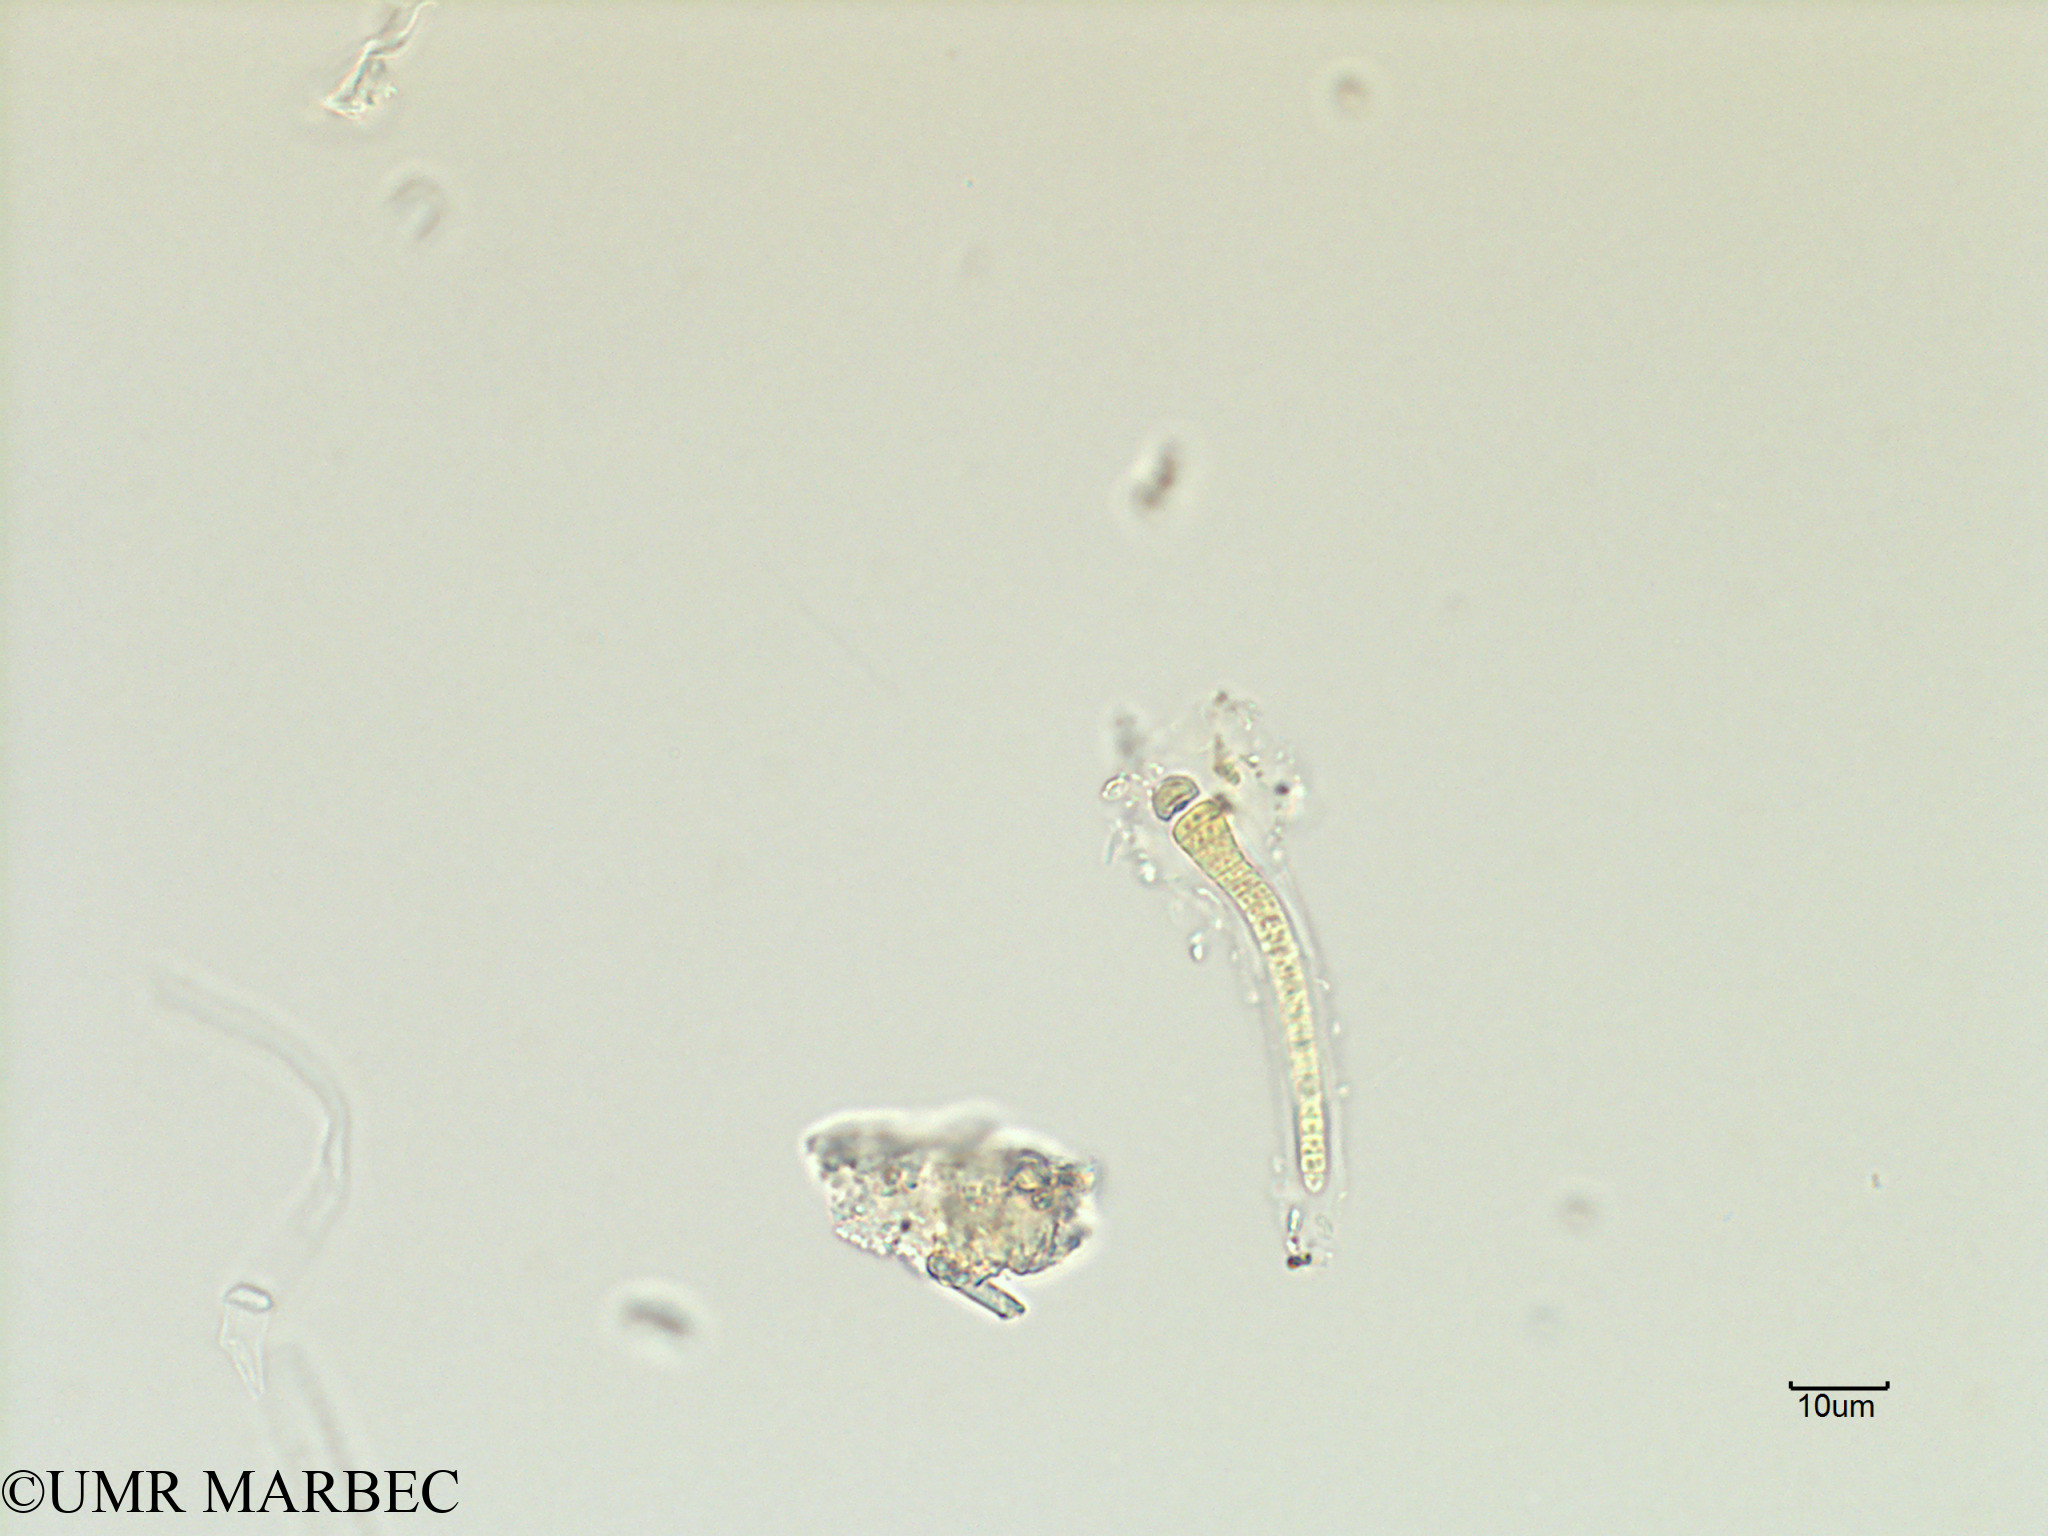 phyto/Scattered_Islands/iles_glorieuses/SIREME November 2015/Calothrix sp1 (SIREME-Glorieuses2015-ech5-231116-photo16 larve-2)(copy).jpg